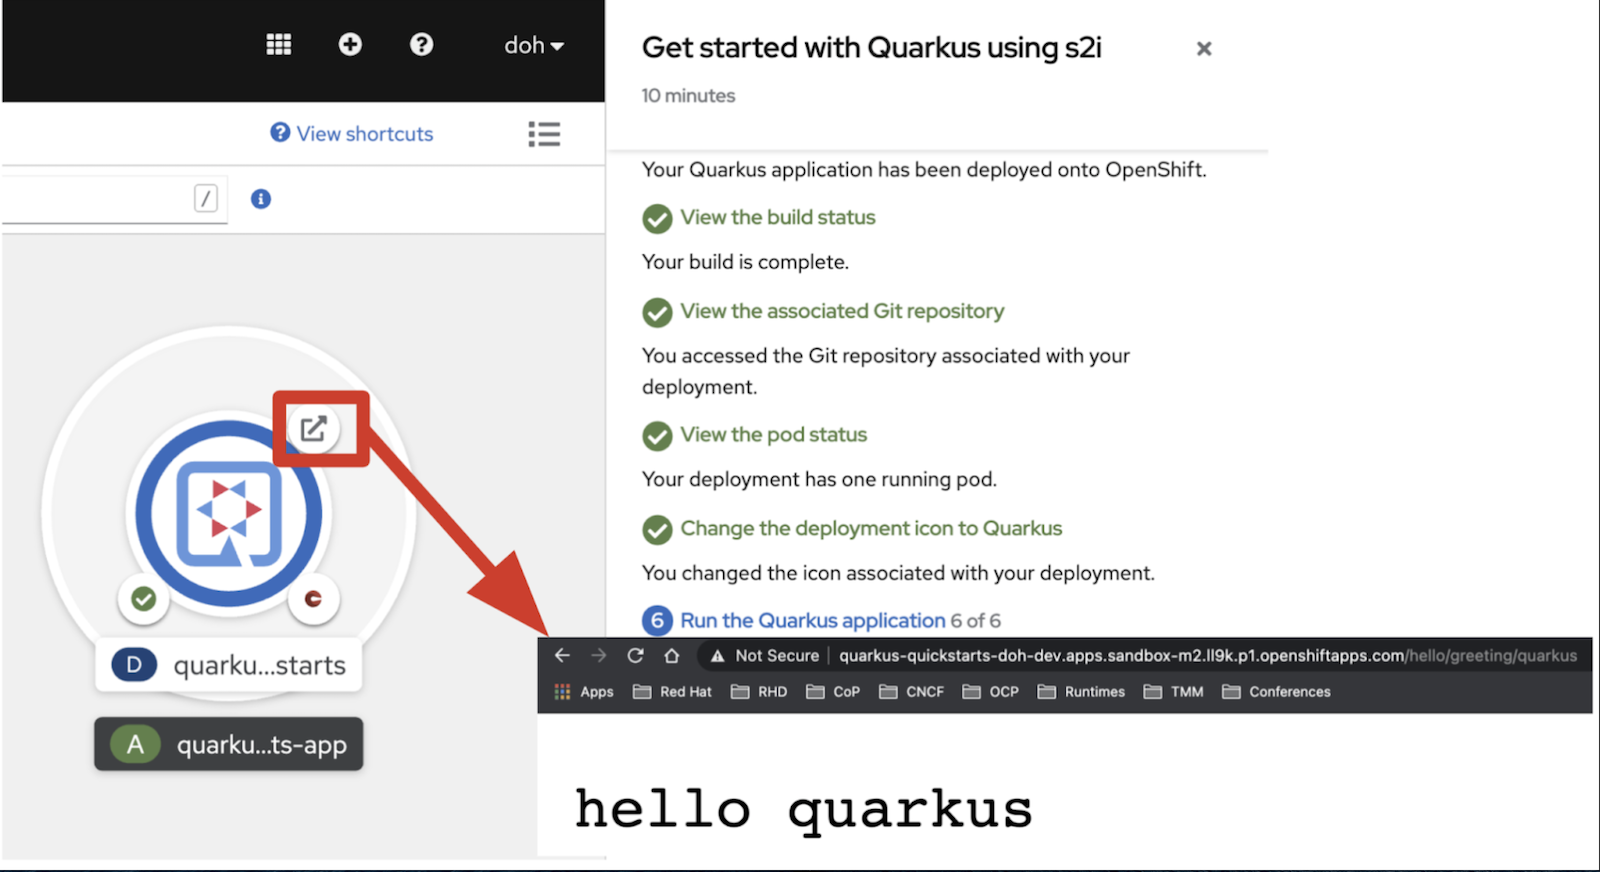 Run the Quarkus application from the REST API.